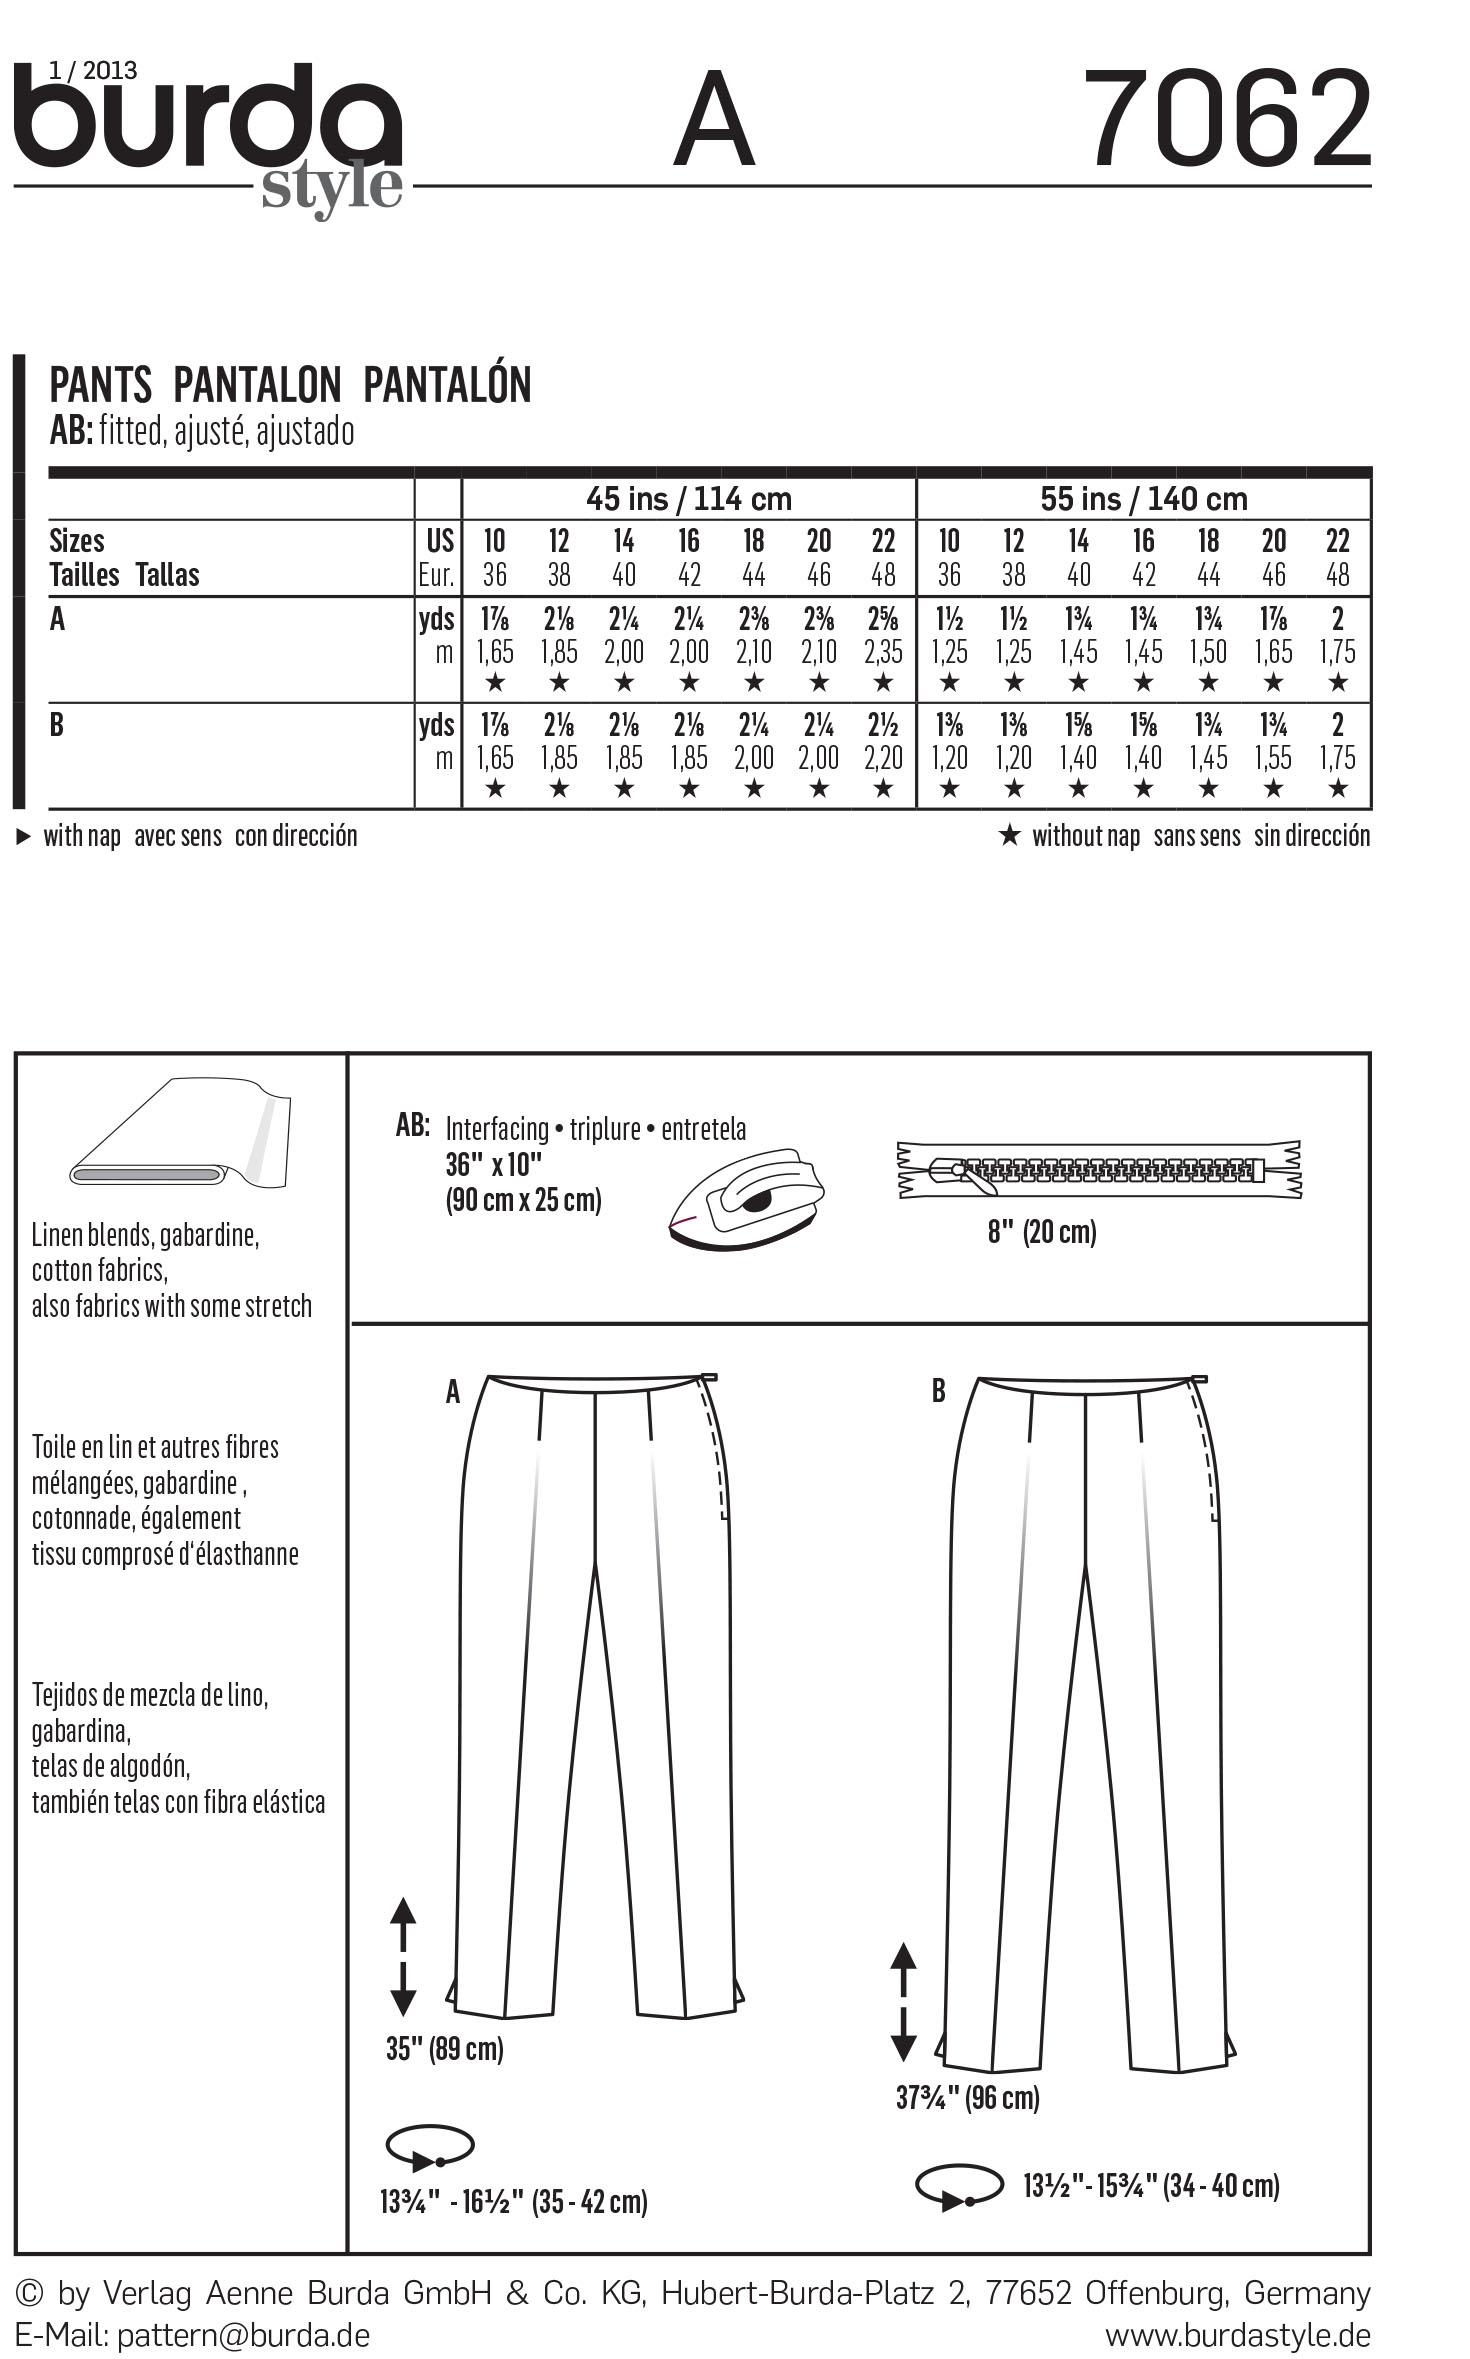 Burda B7062 Trousers Sewing Pattern